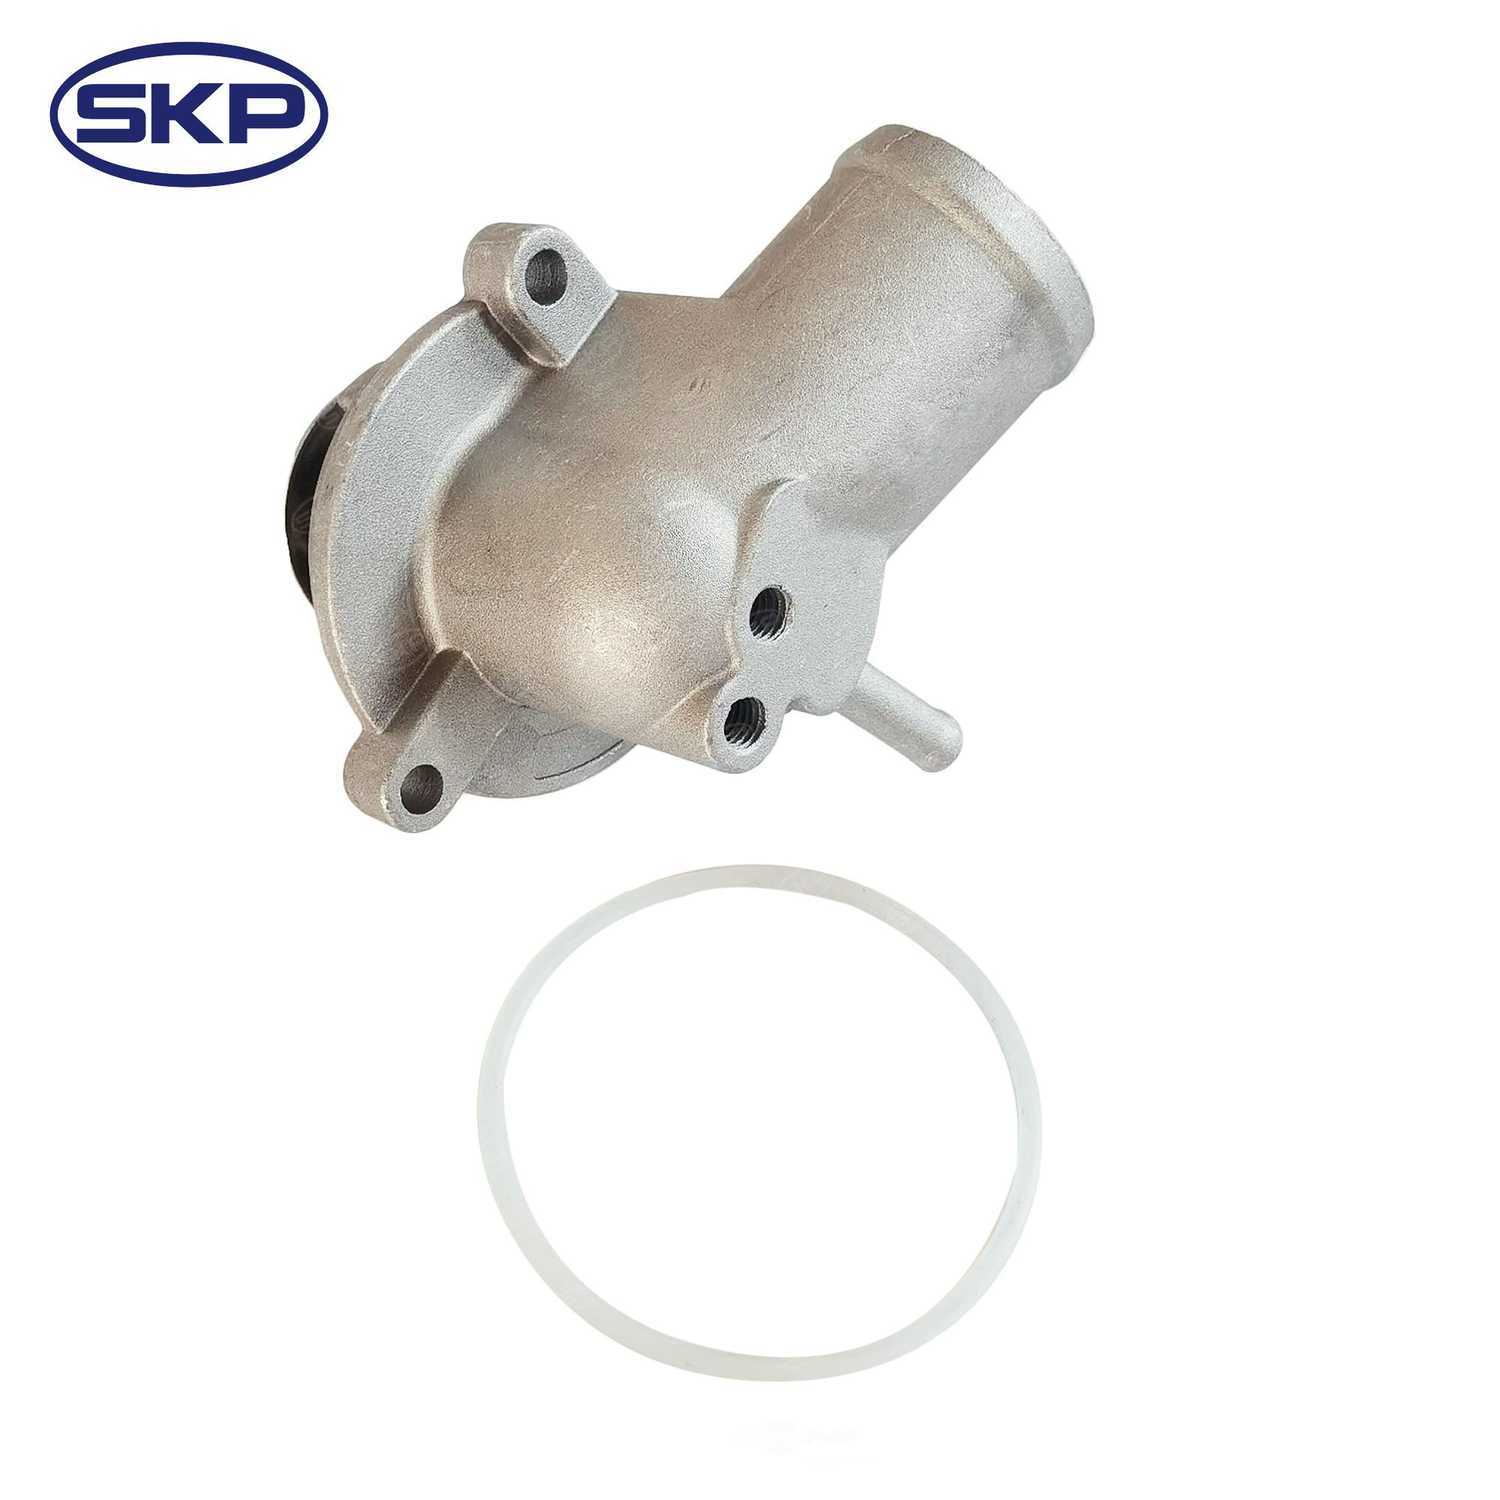 SKP - Engine Coolant Thermostat Housing Assembly - SKP SK9025146